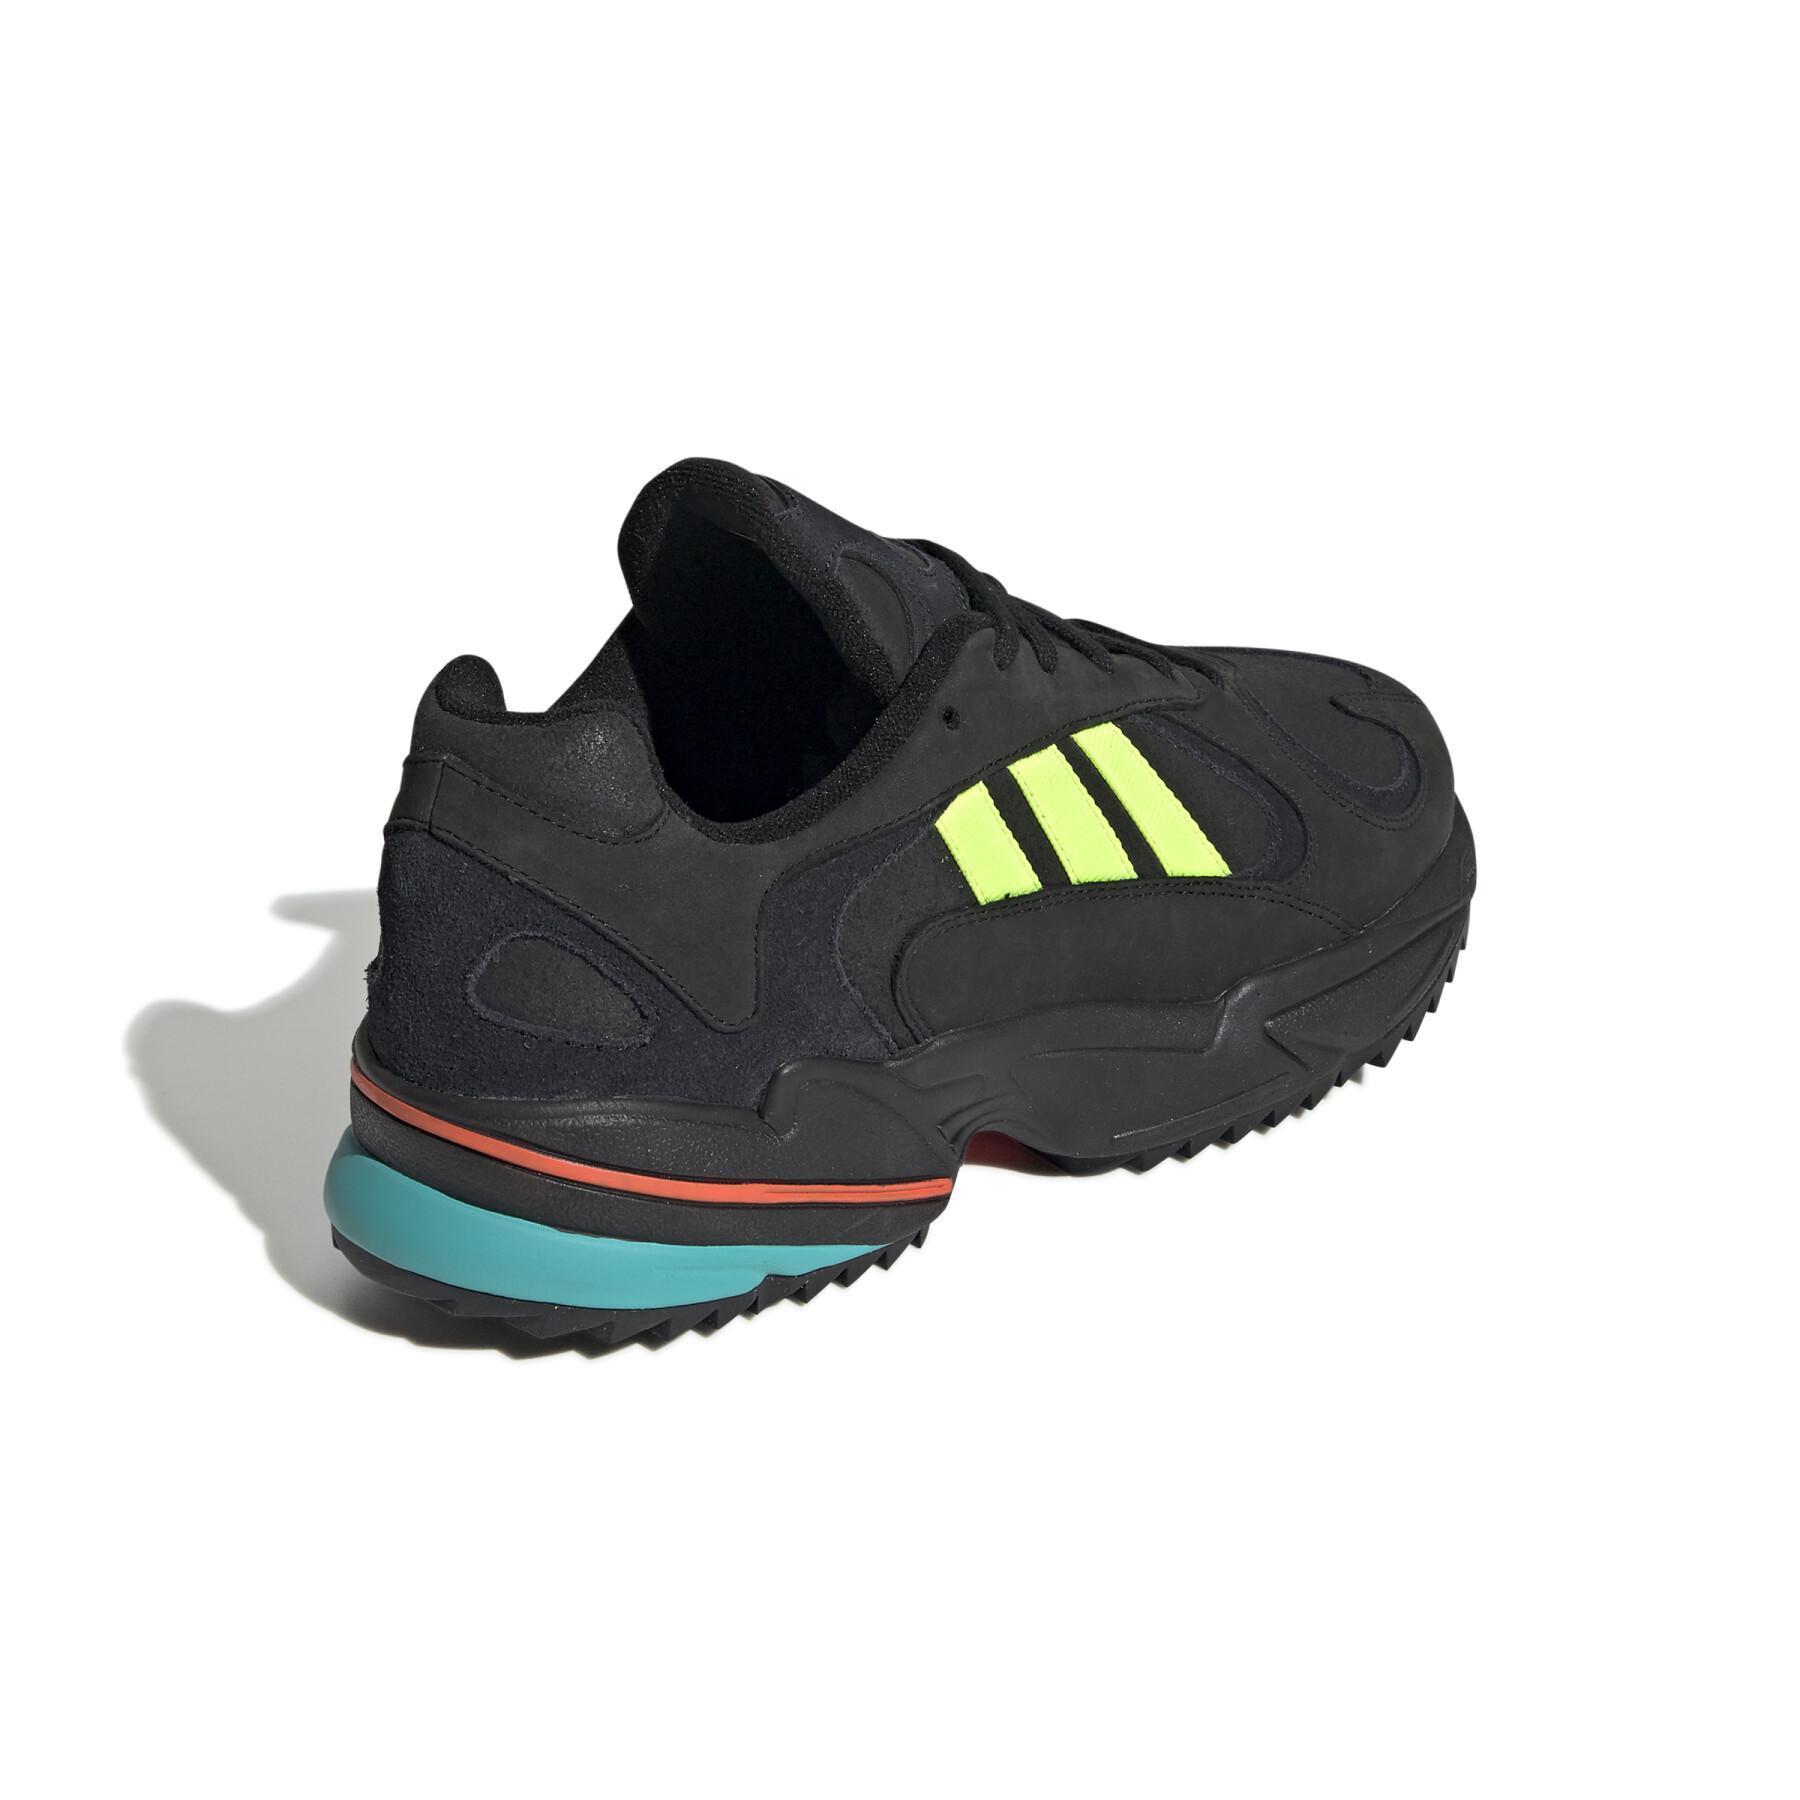 Tränare adidas Yung-1 Trail